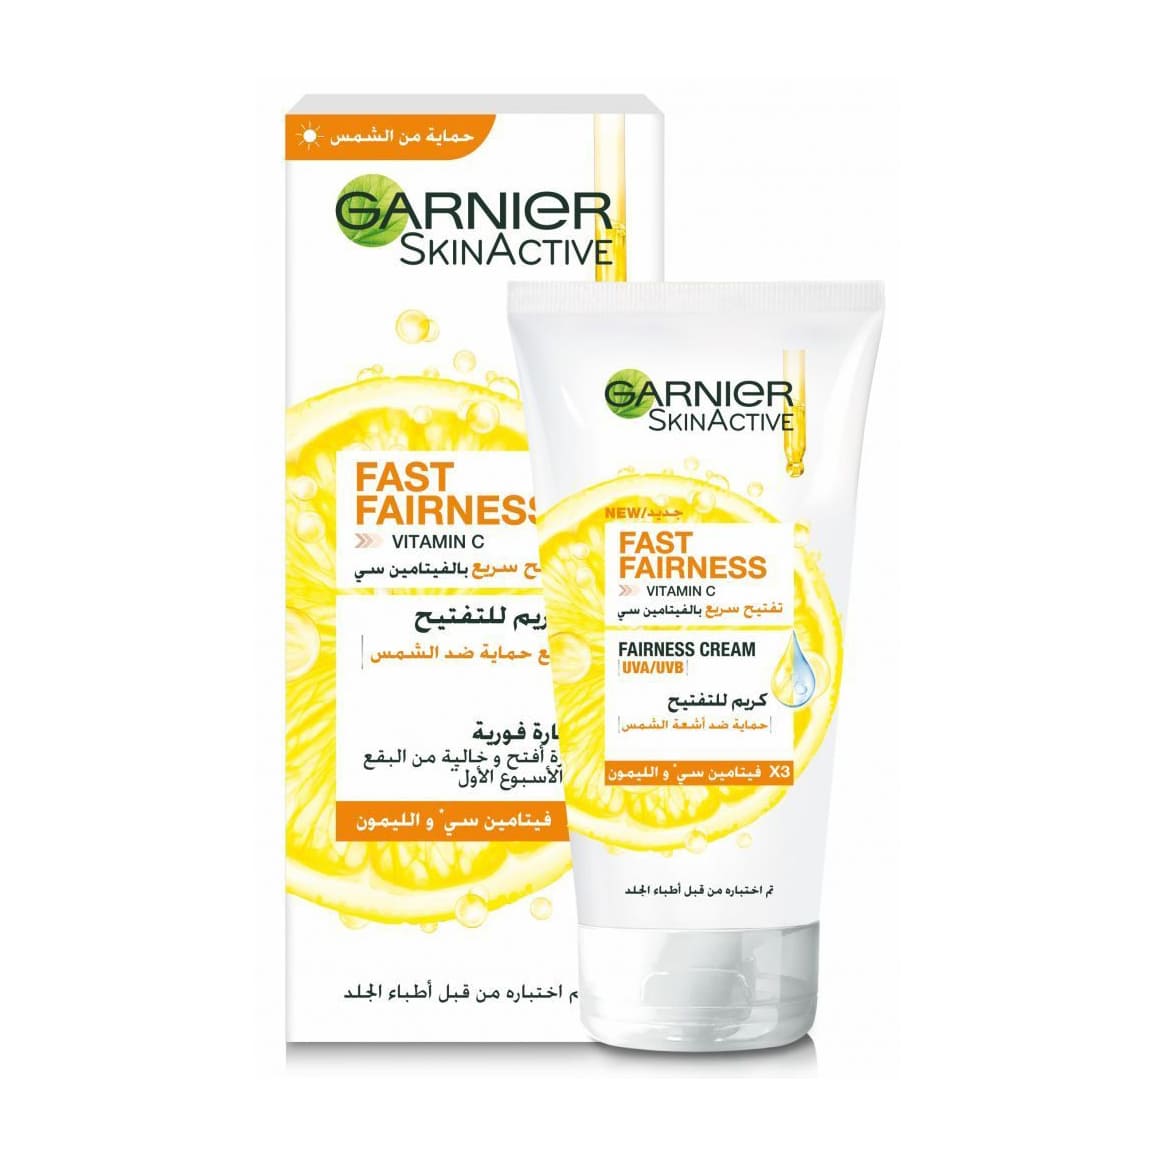 Garnier Skinactive Fast Fairness Uva-Uvb Vitamin C Cream - 50ml - Bloom Pharmacy